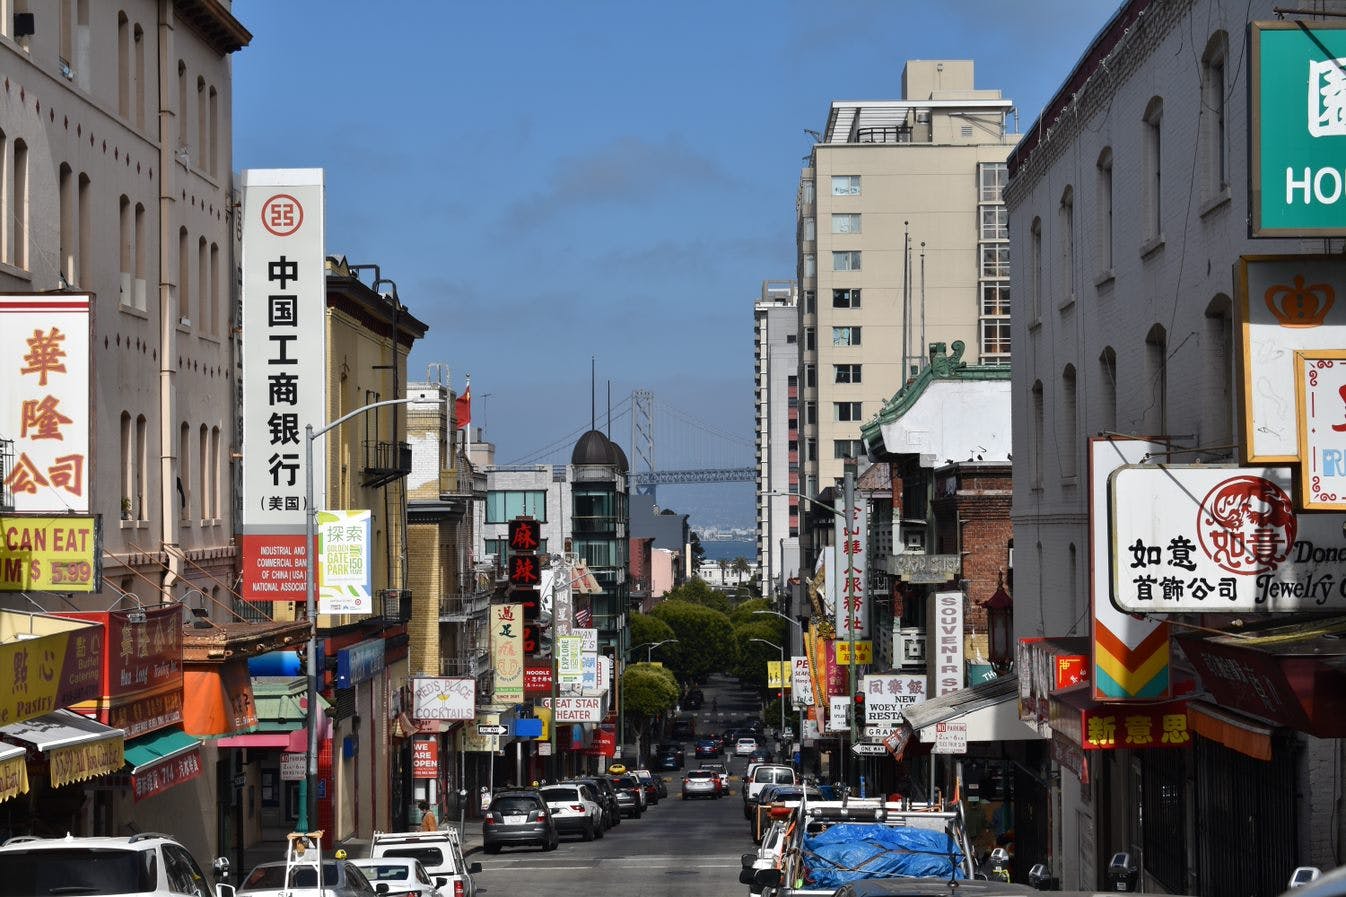 San Francisco Chinatown food and history walking tour